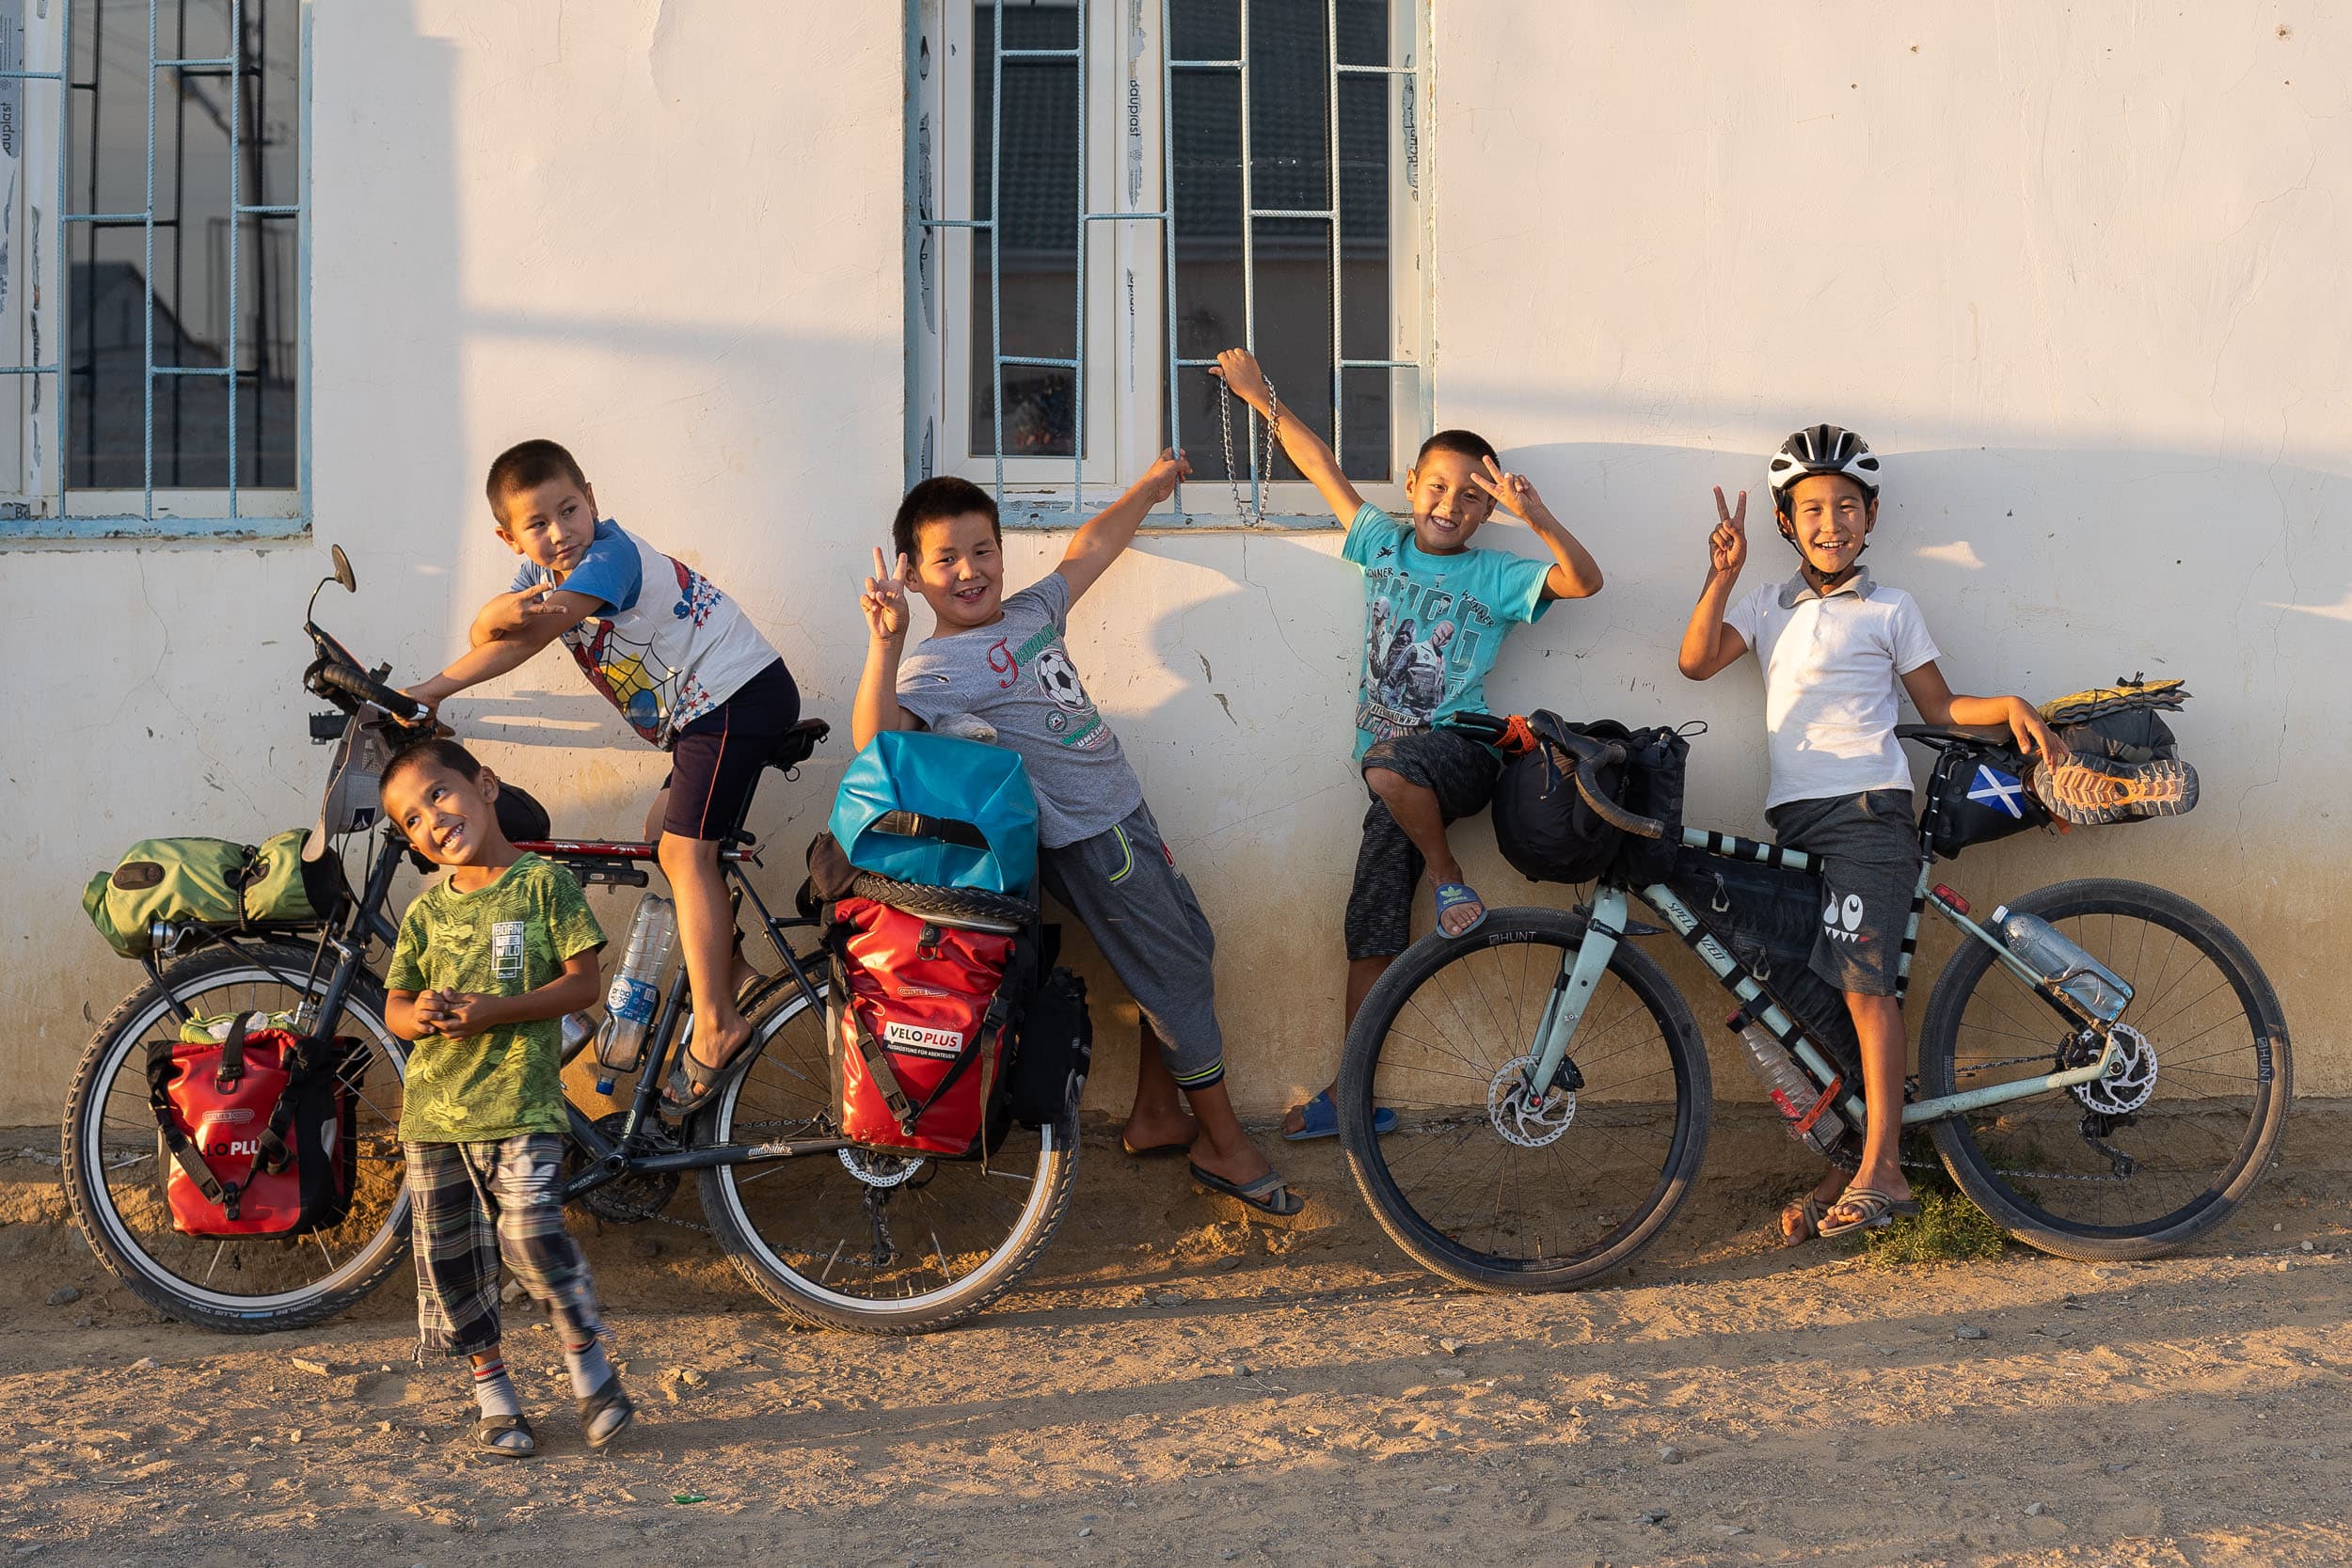 Kazakh kids posing with bicycles